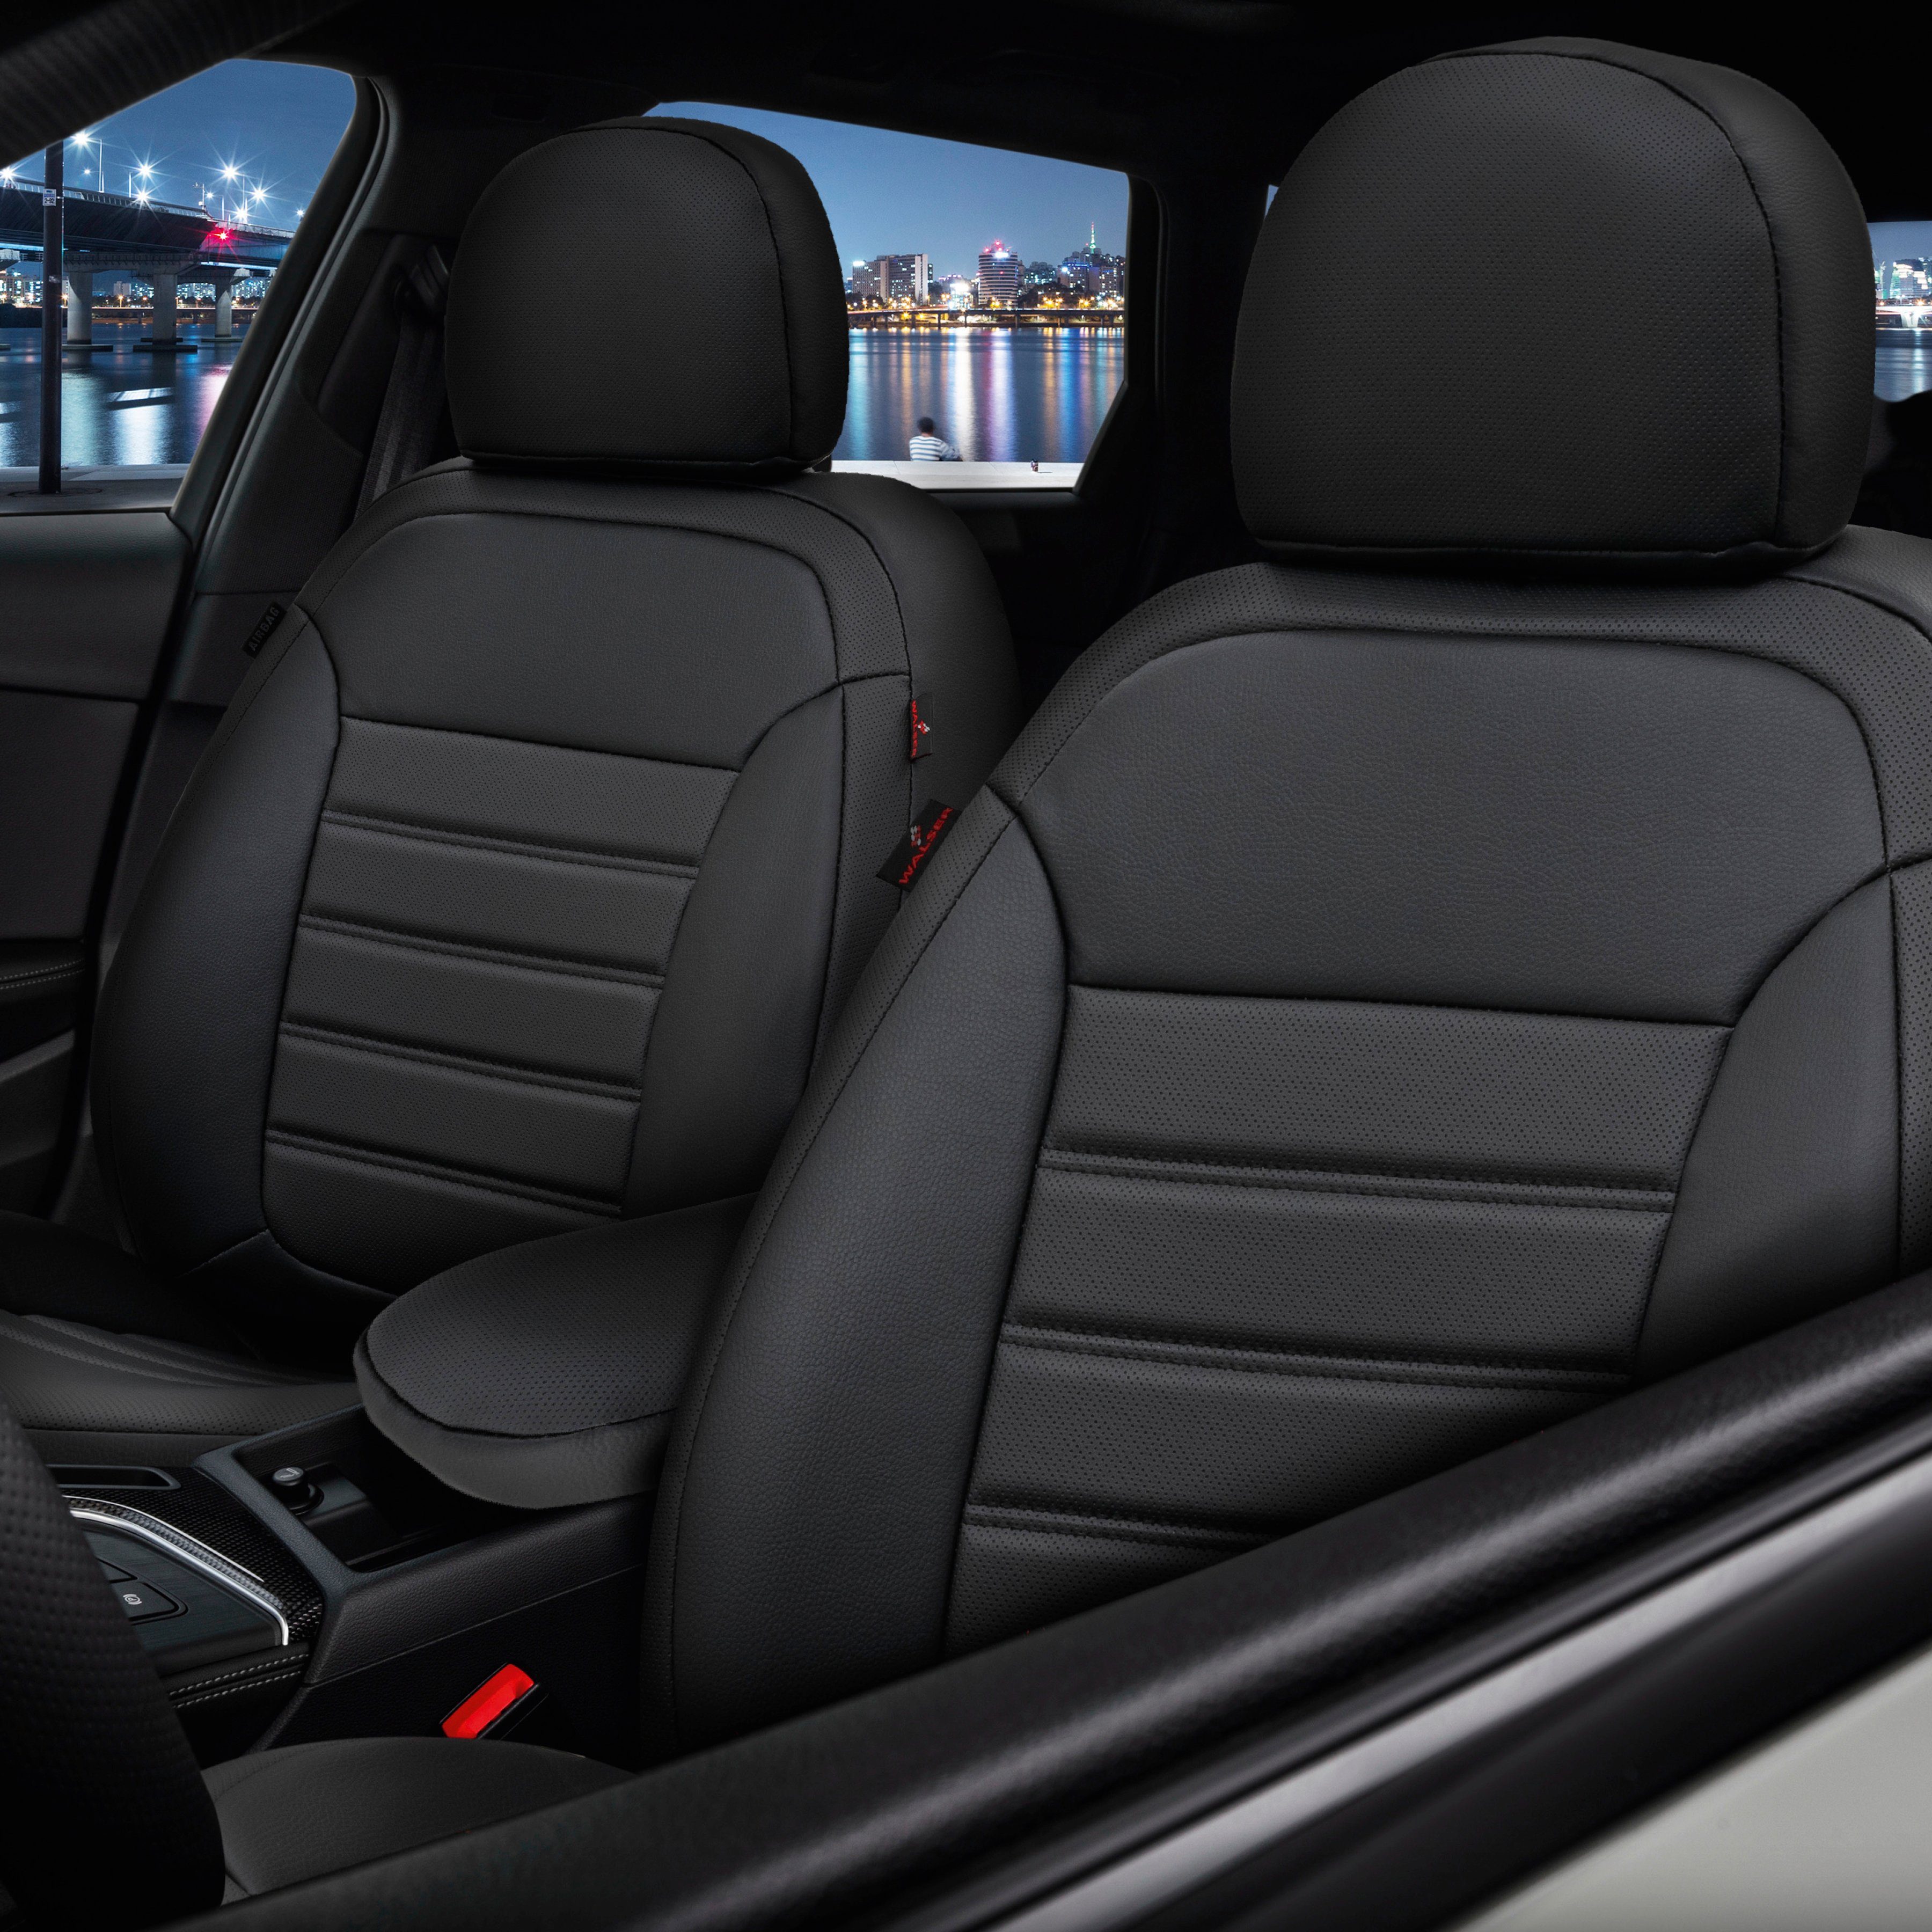 für B9) Audi 8WD Robusto, 08/2015-Heute für WALSER Normalsitze, passgenau (8W5 A4 Einzelsitzbezüge 2 Avant Autositzbezug